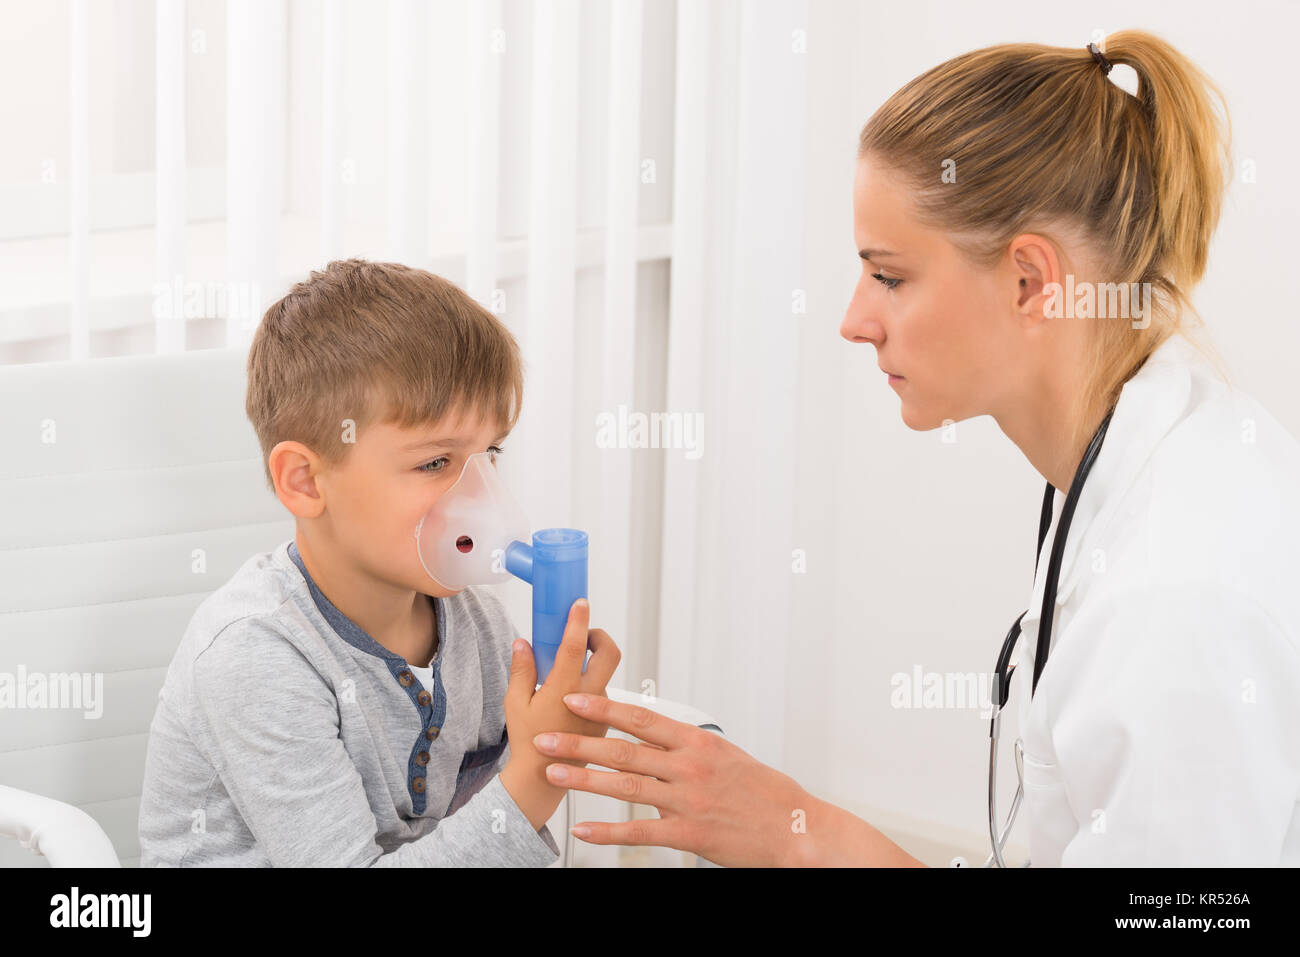 Child Patient Inhaling Through Oxygen Mask Stock Photo